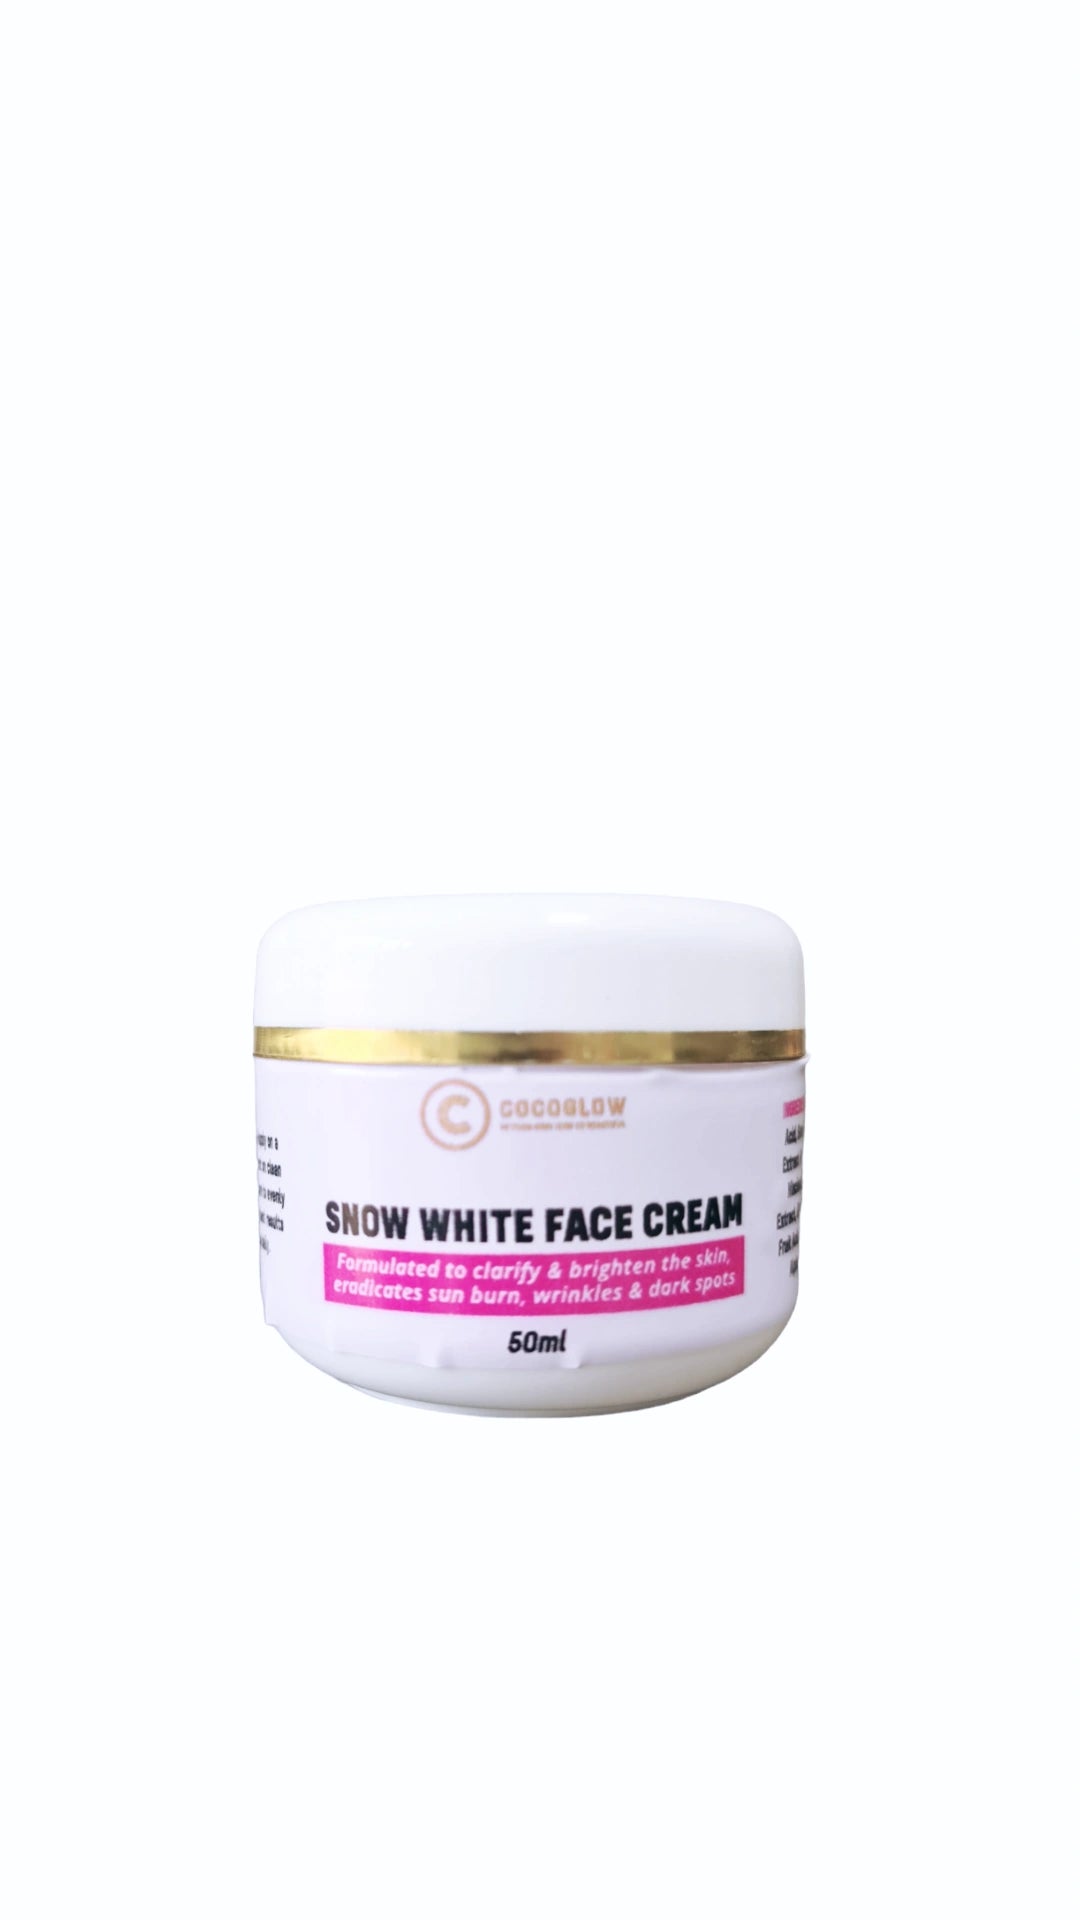 Snow white face cream